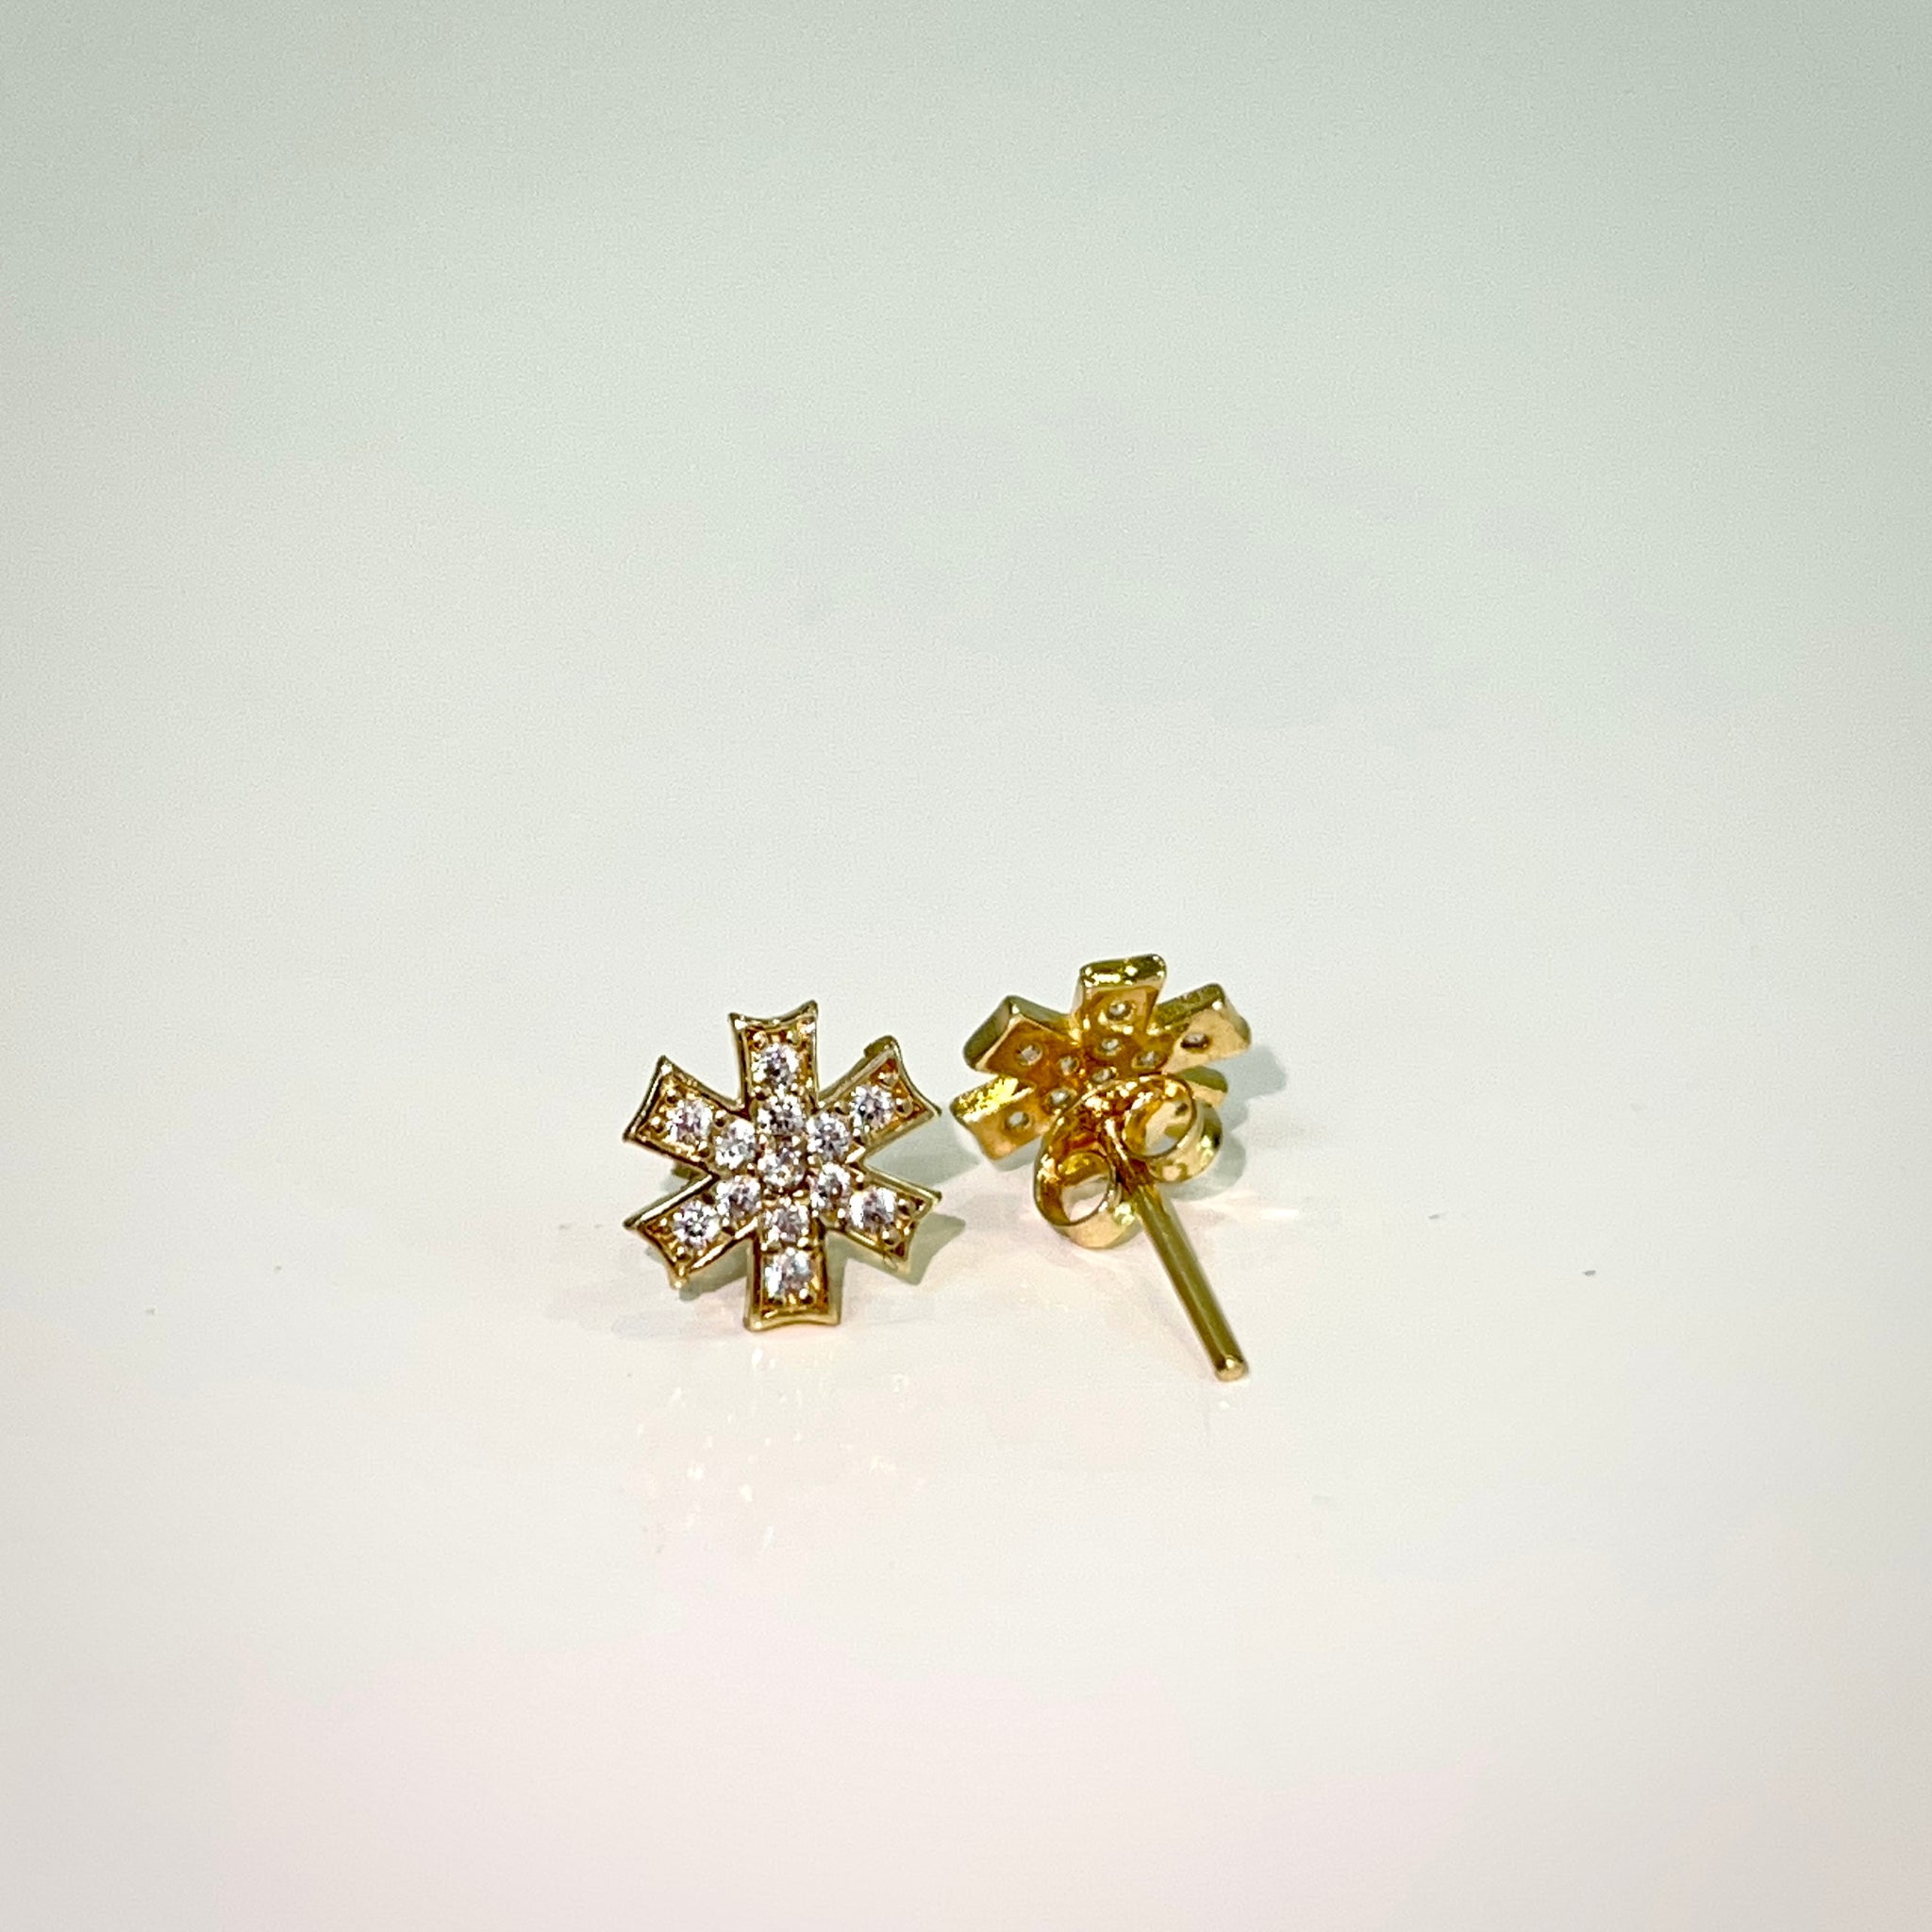 Ice Flake Earrings - 14 carat gold - Cubic Zirkonia Stones